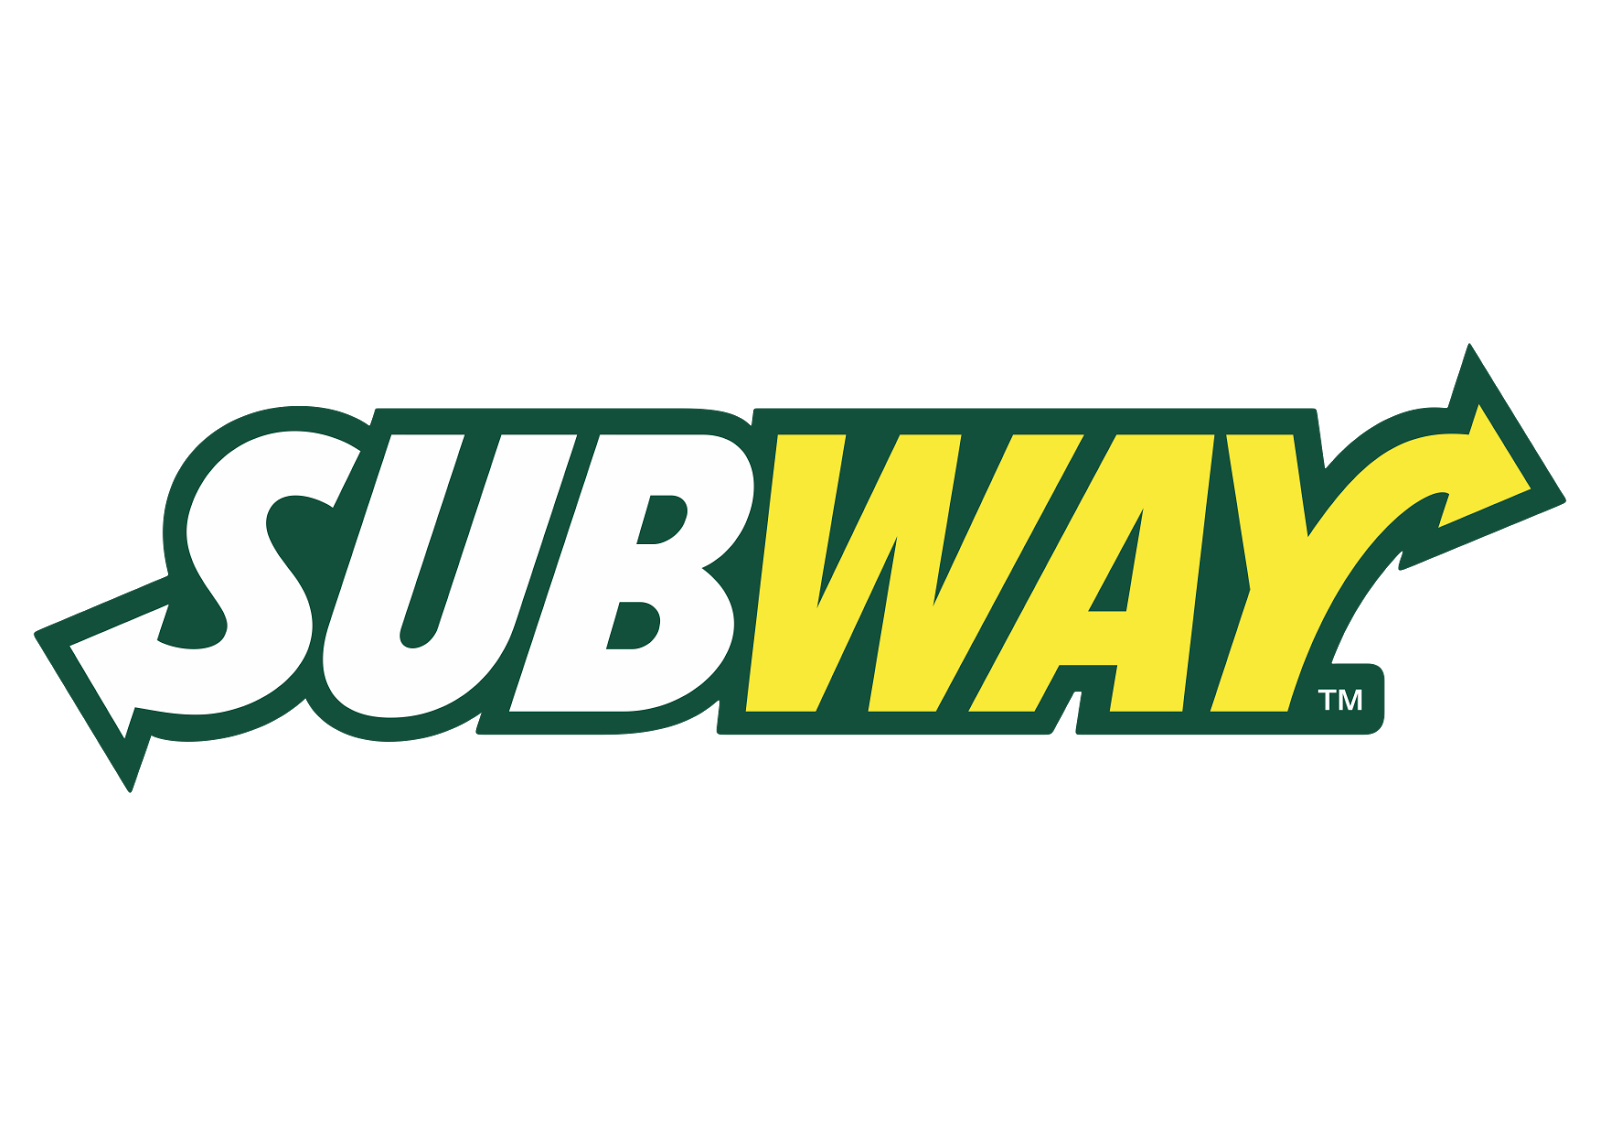 New Logo for Subway